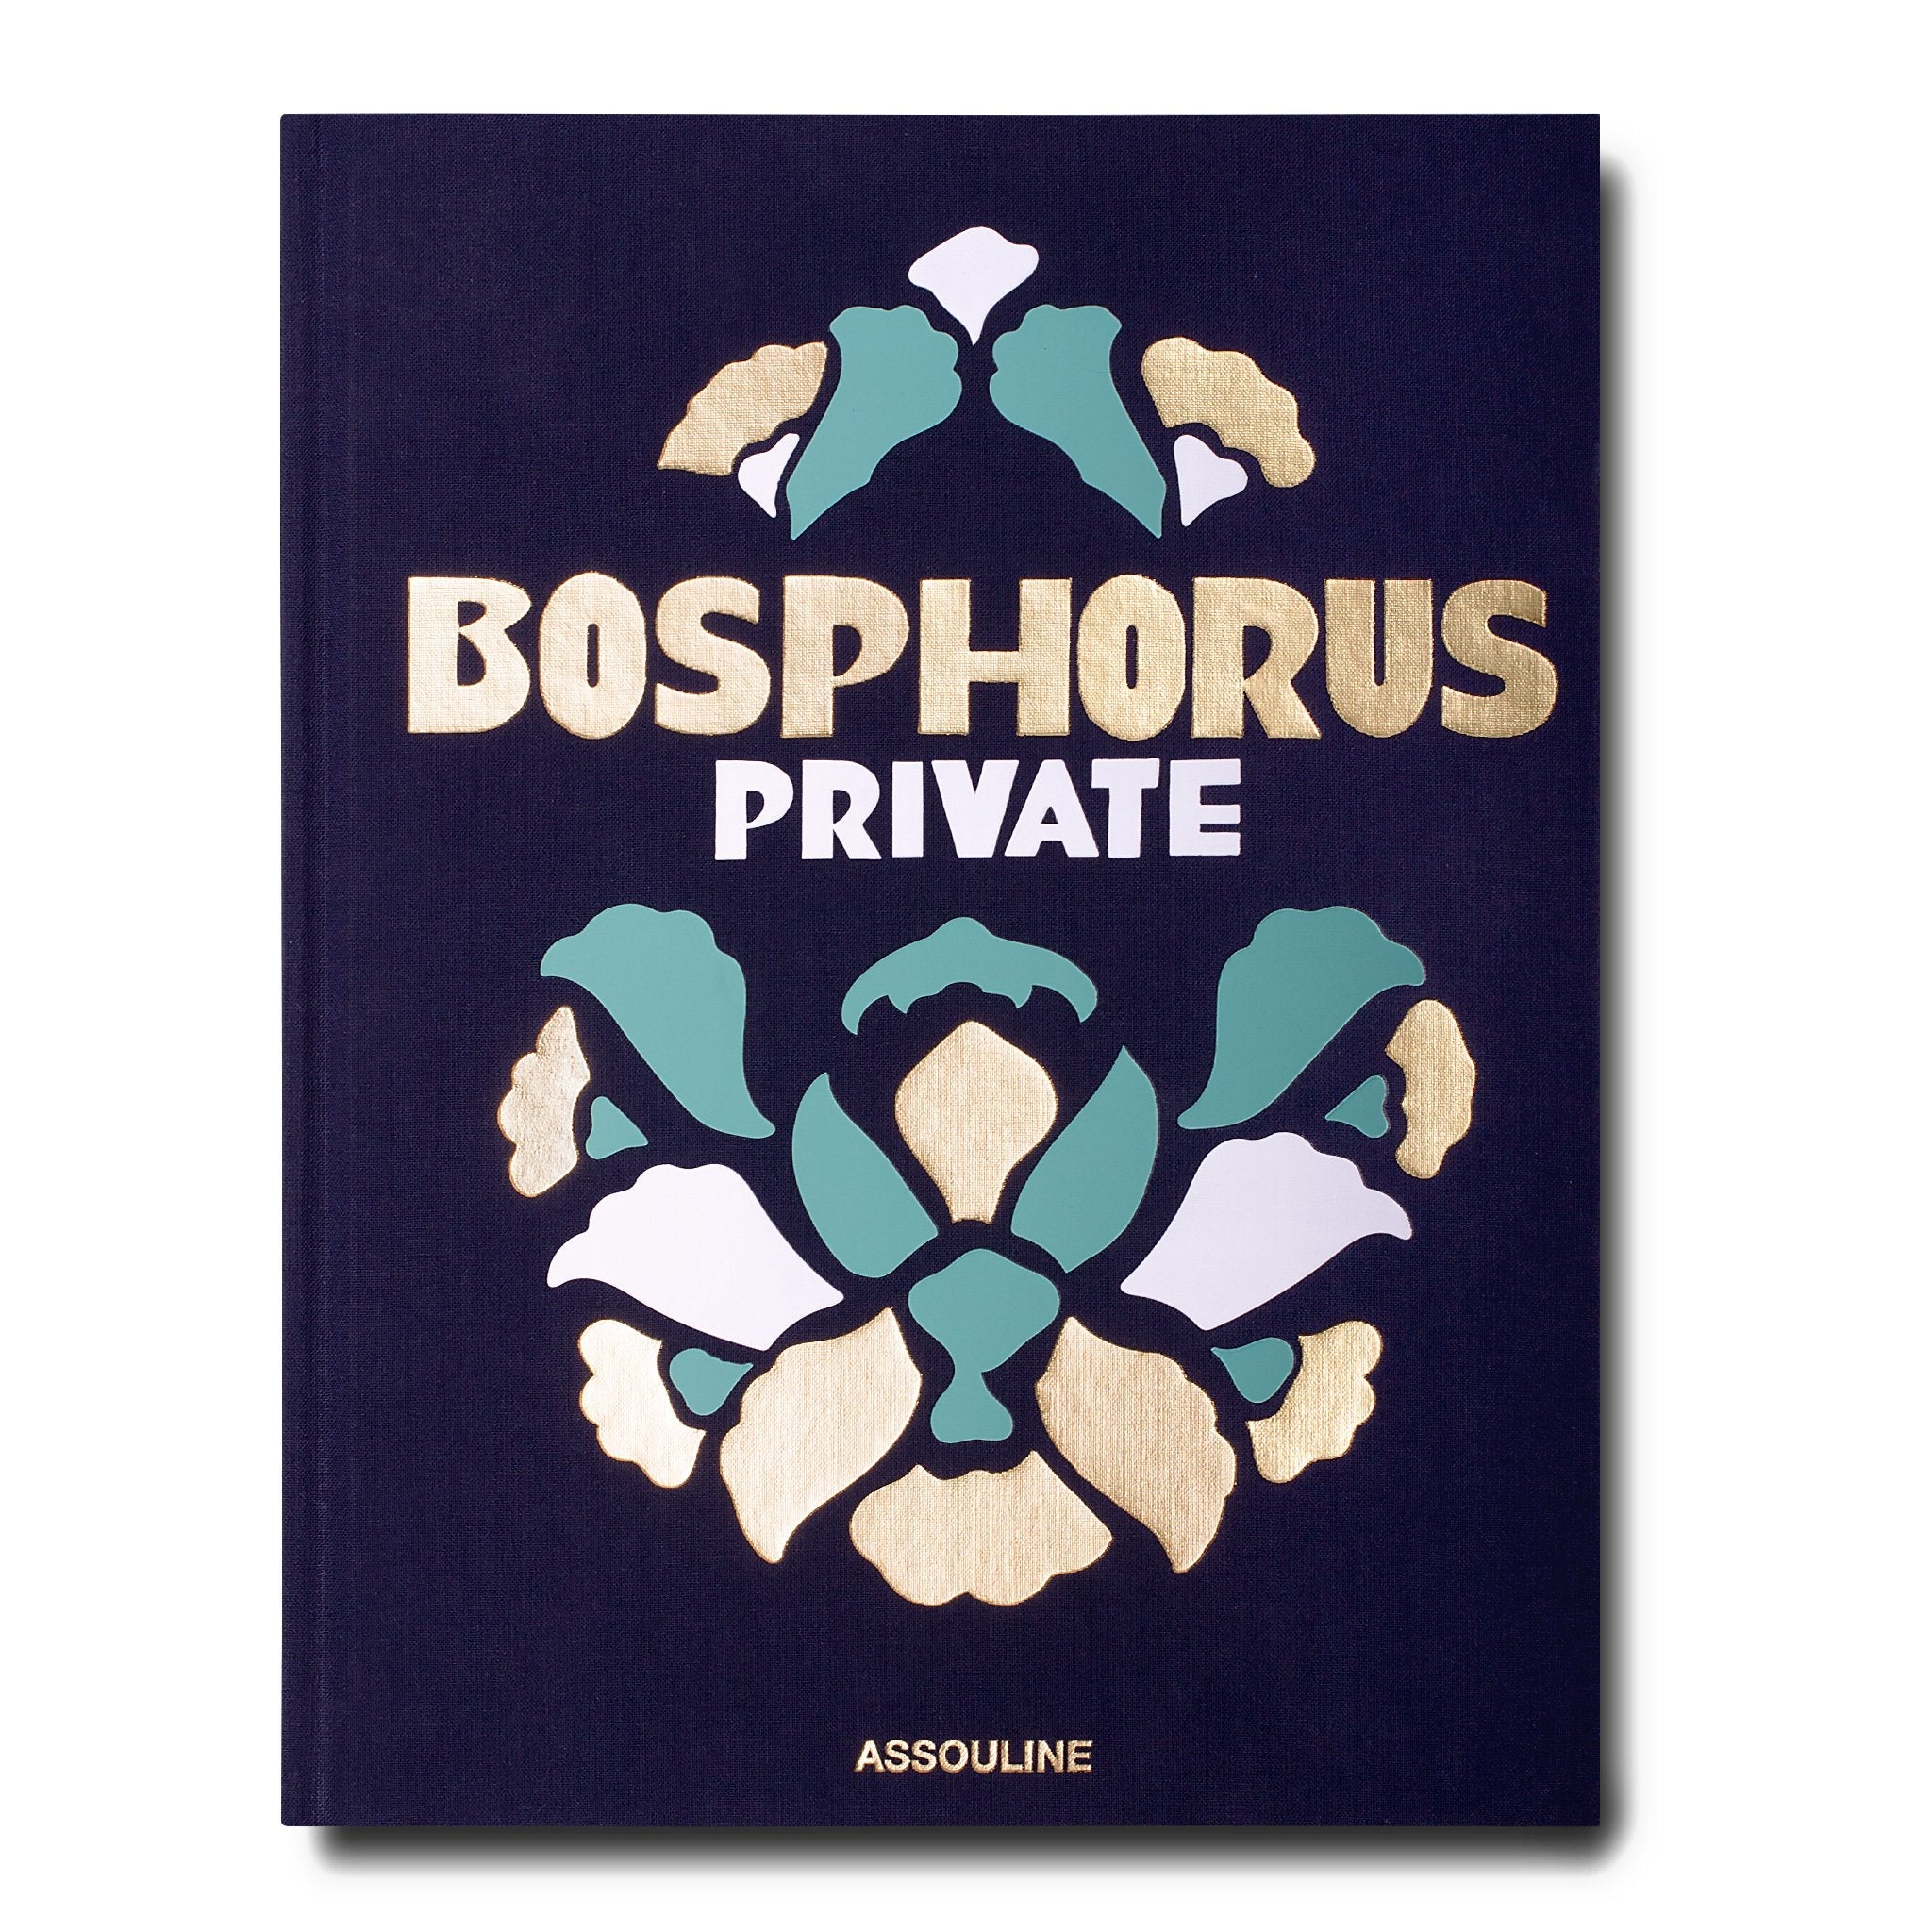 ASSOULINE Bosphorus Private Hardcover Book by Nevbahar Koç